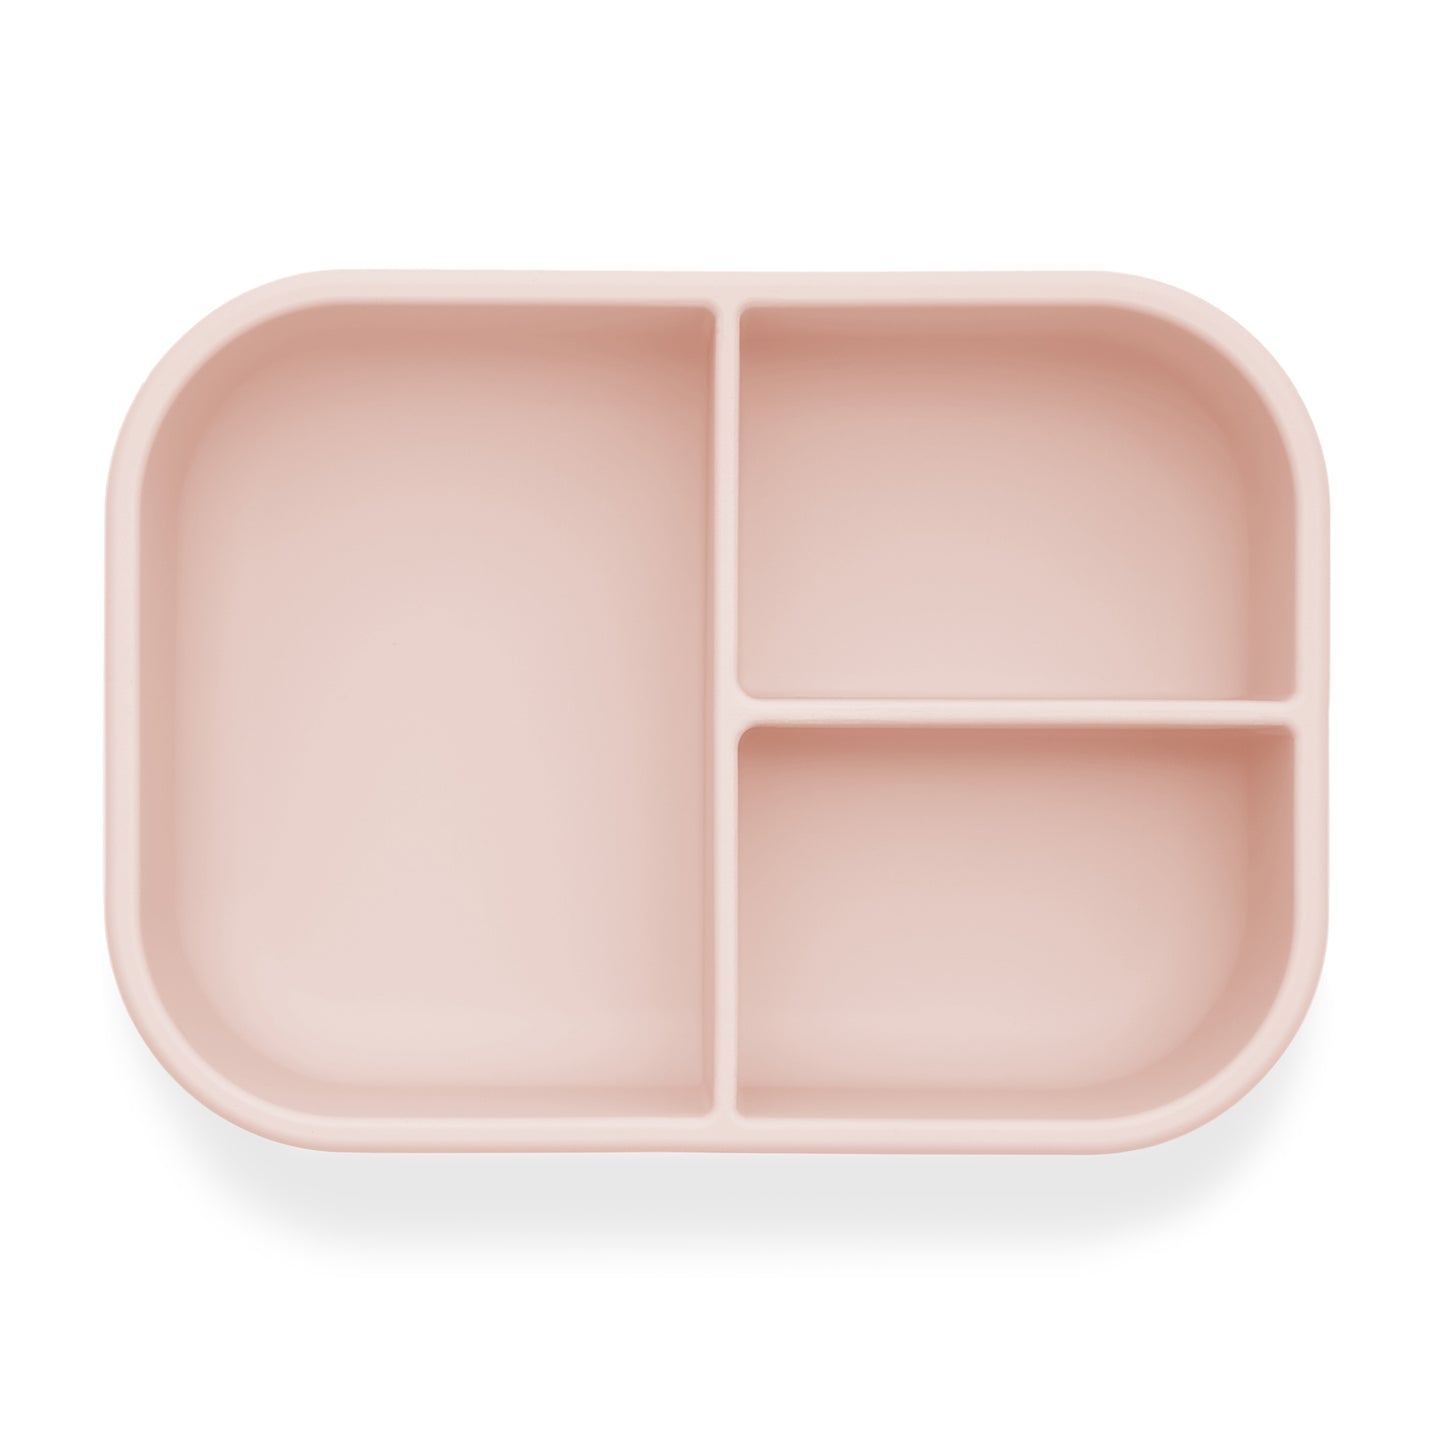 Ali+Oli Reusable Silicone Bento Box - 3 Compartments - Leakproof (Blush)